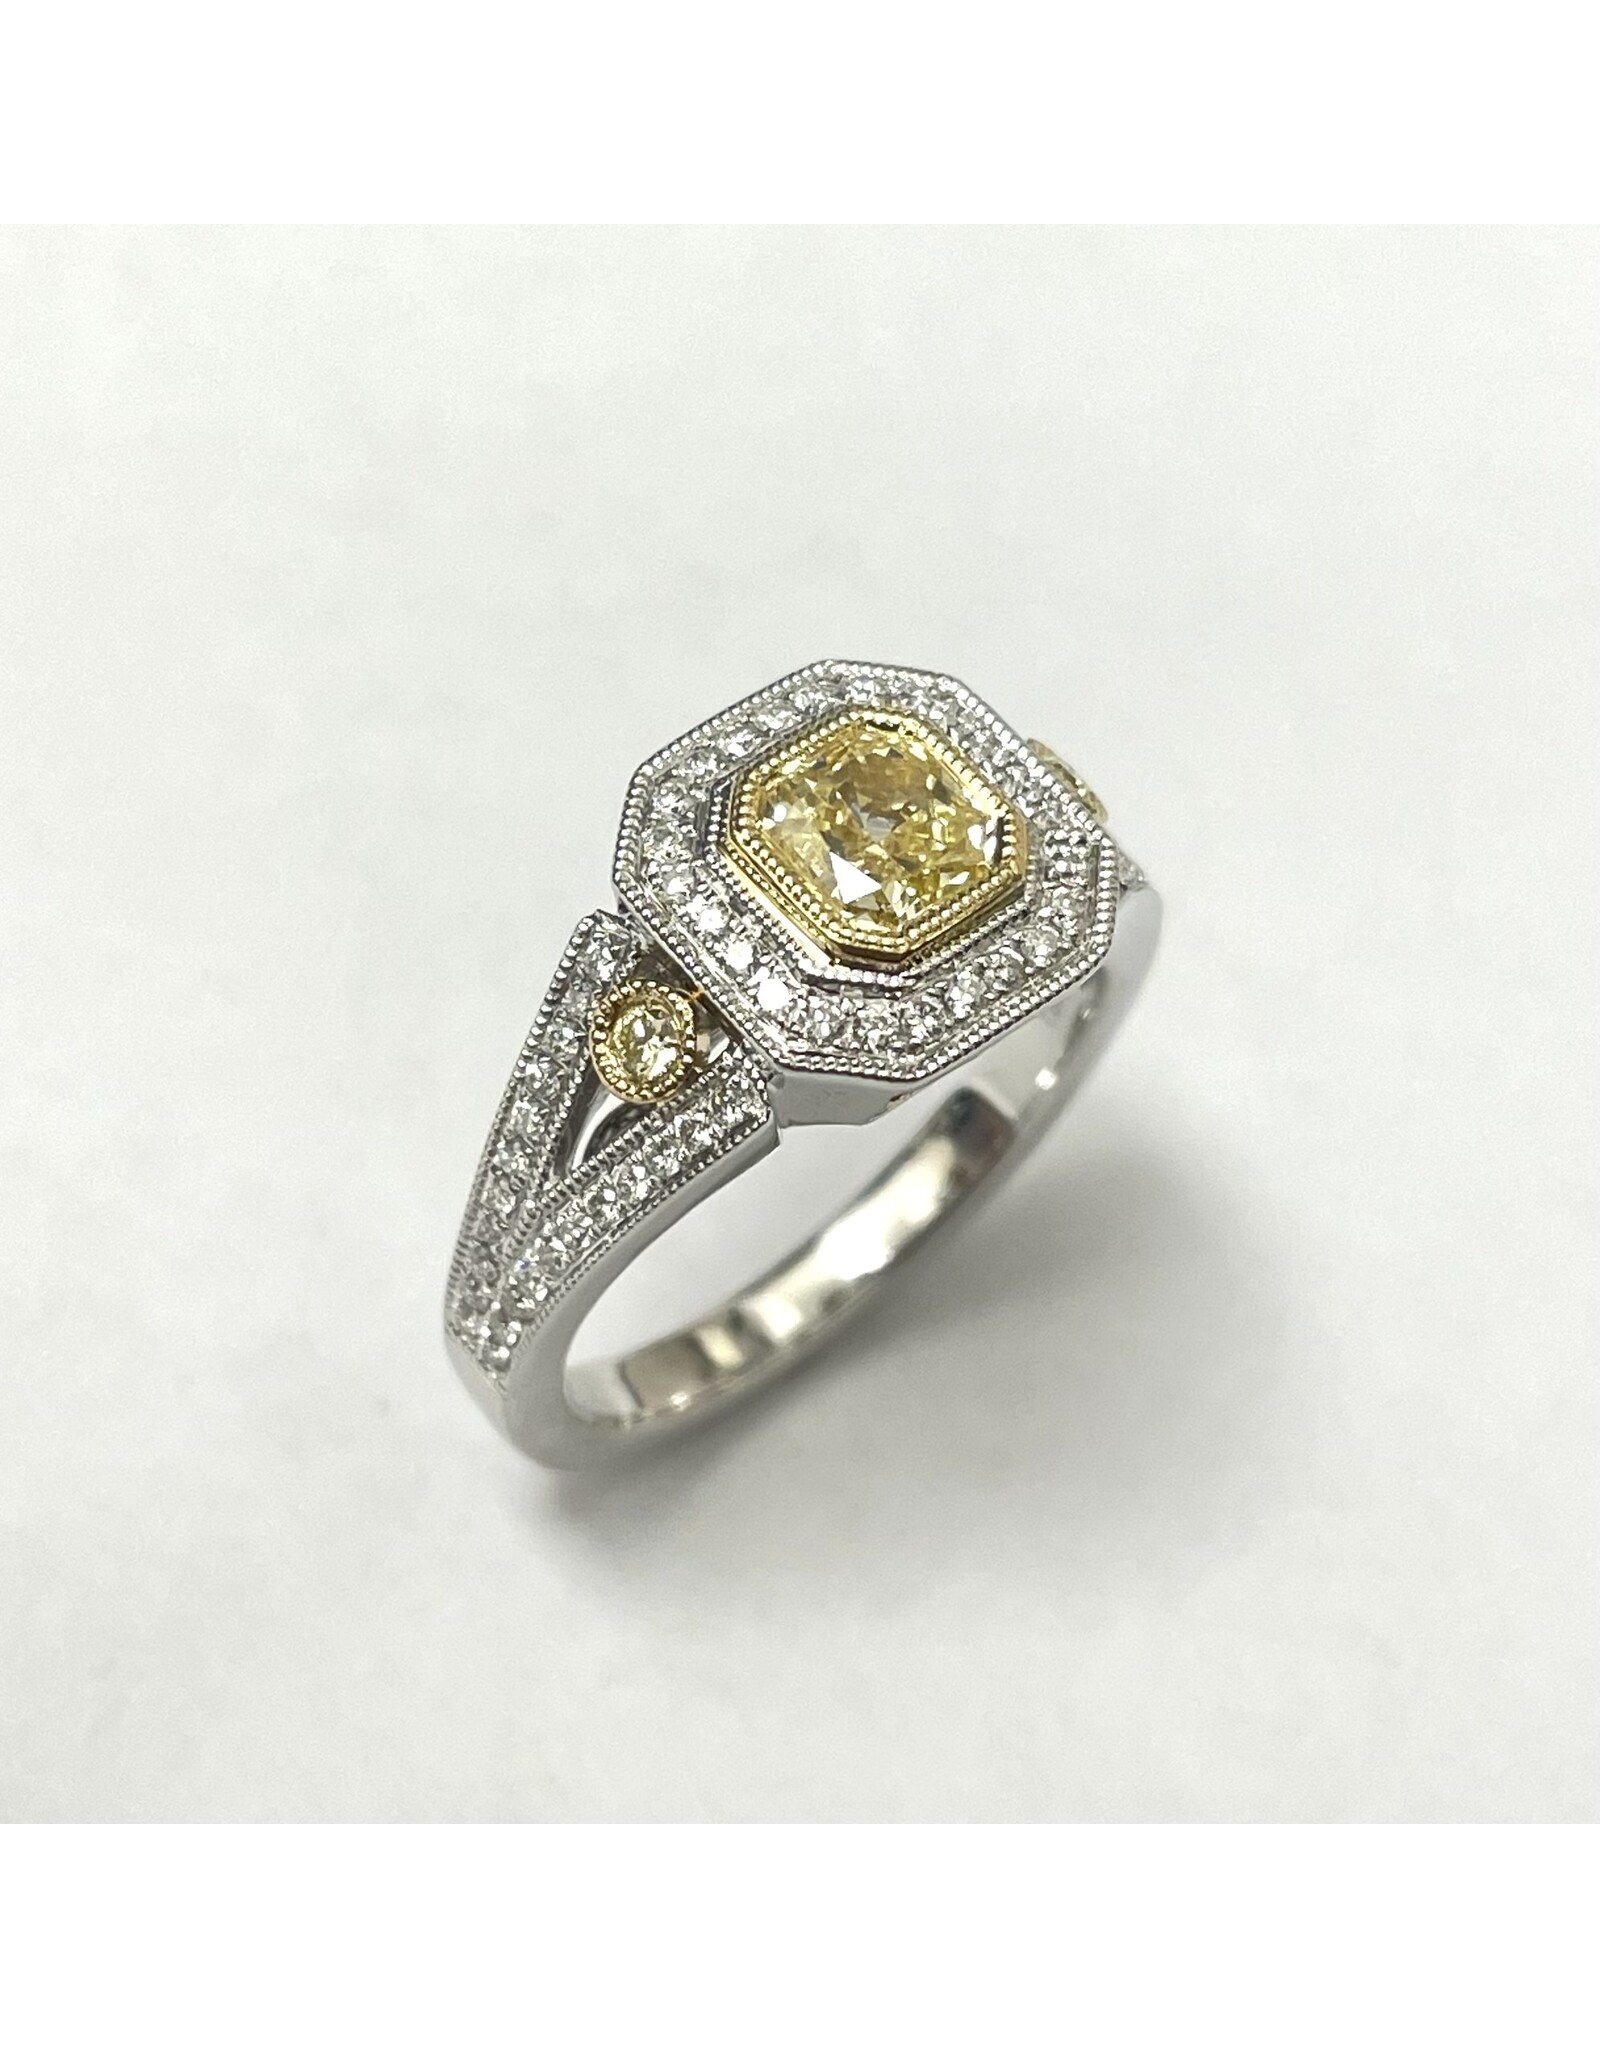 Natural Fancy Yellow & White Diamond Ring 18KYW